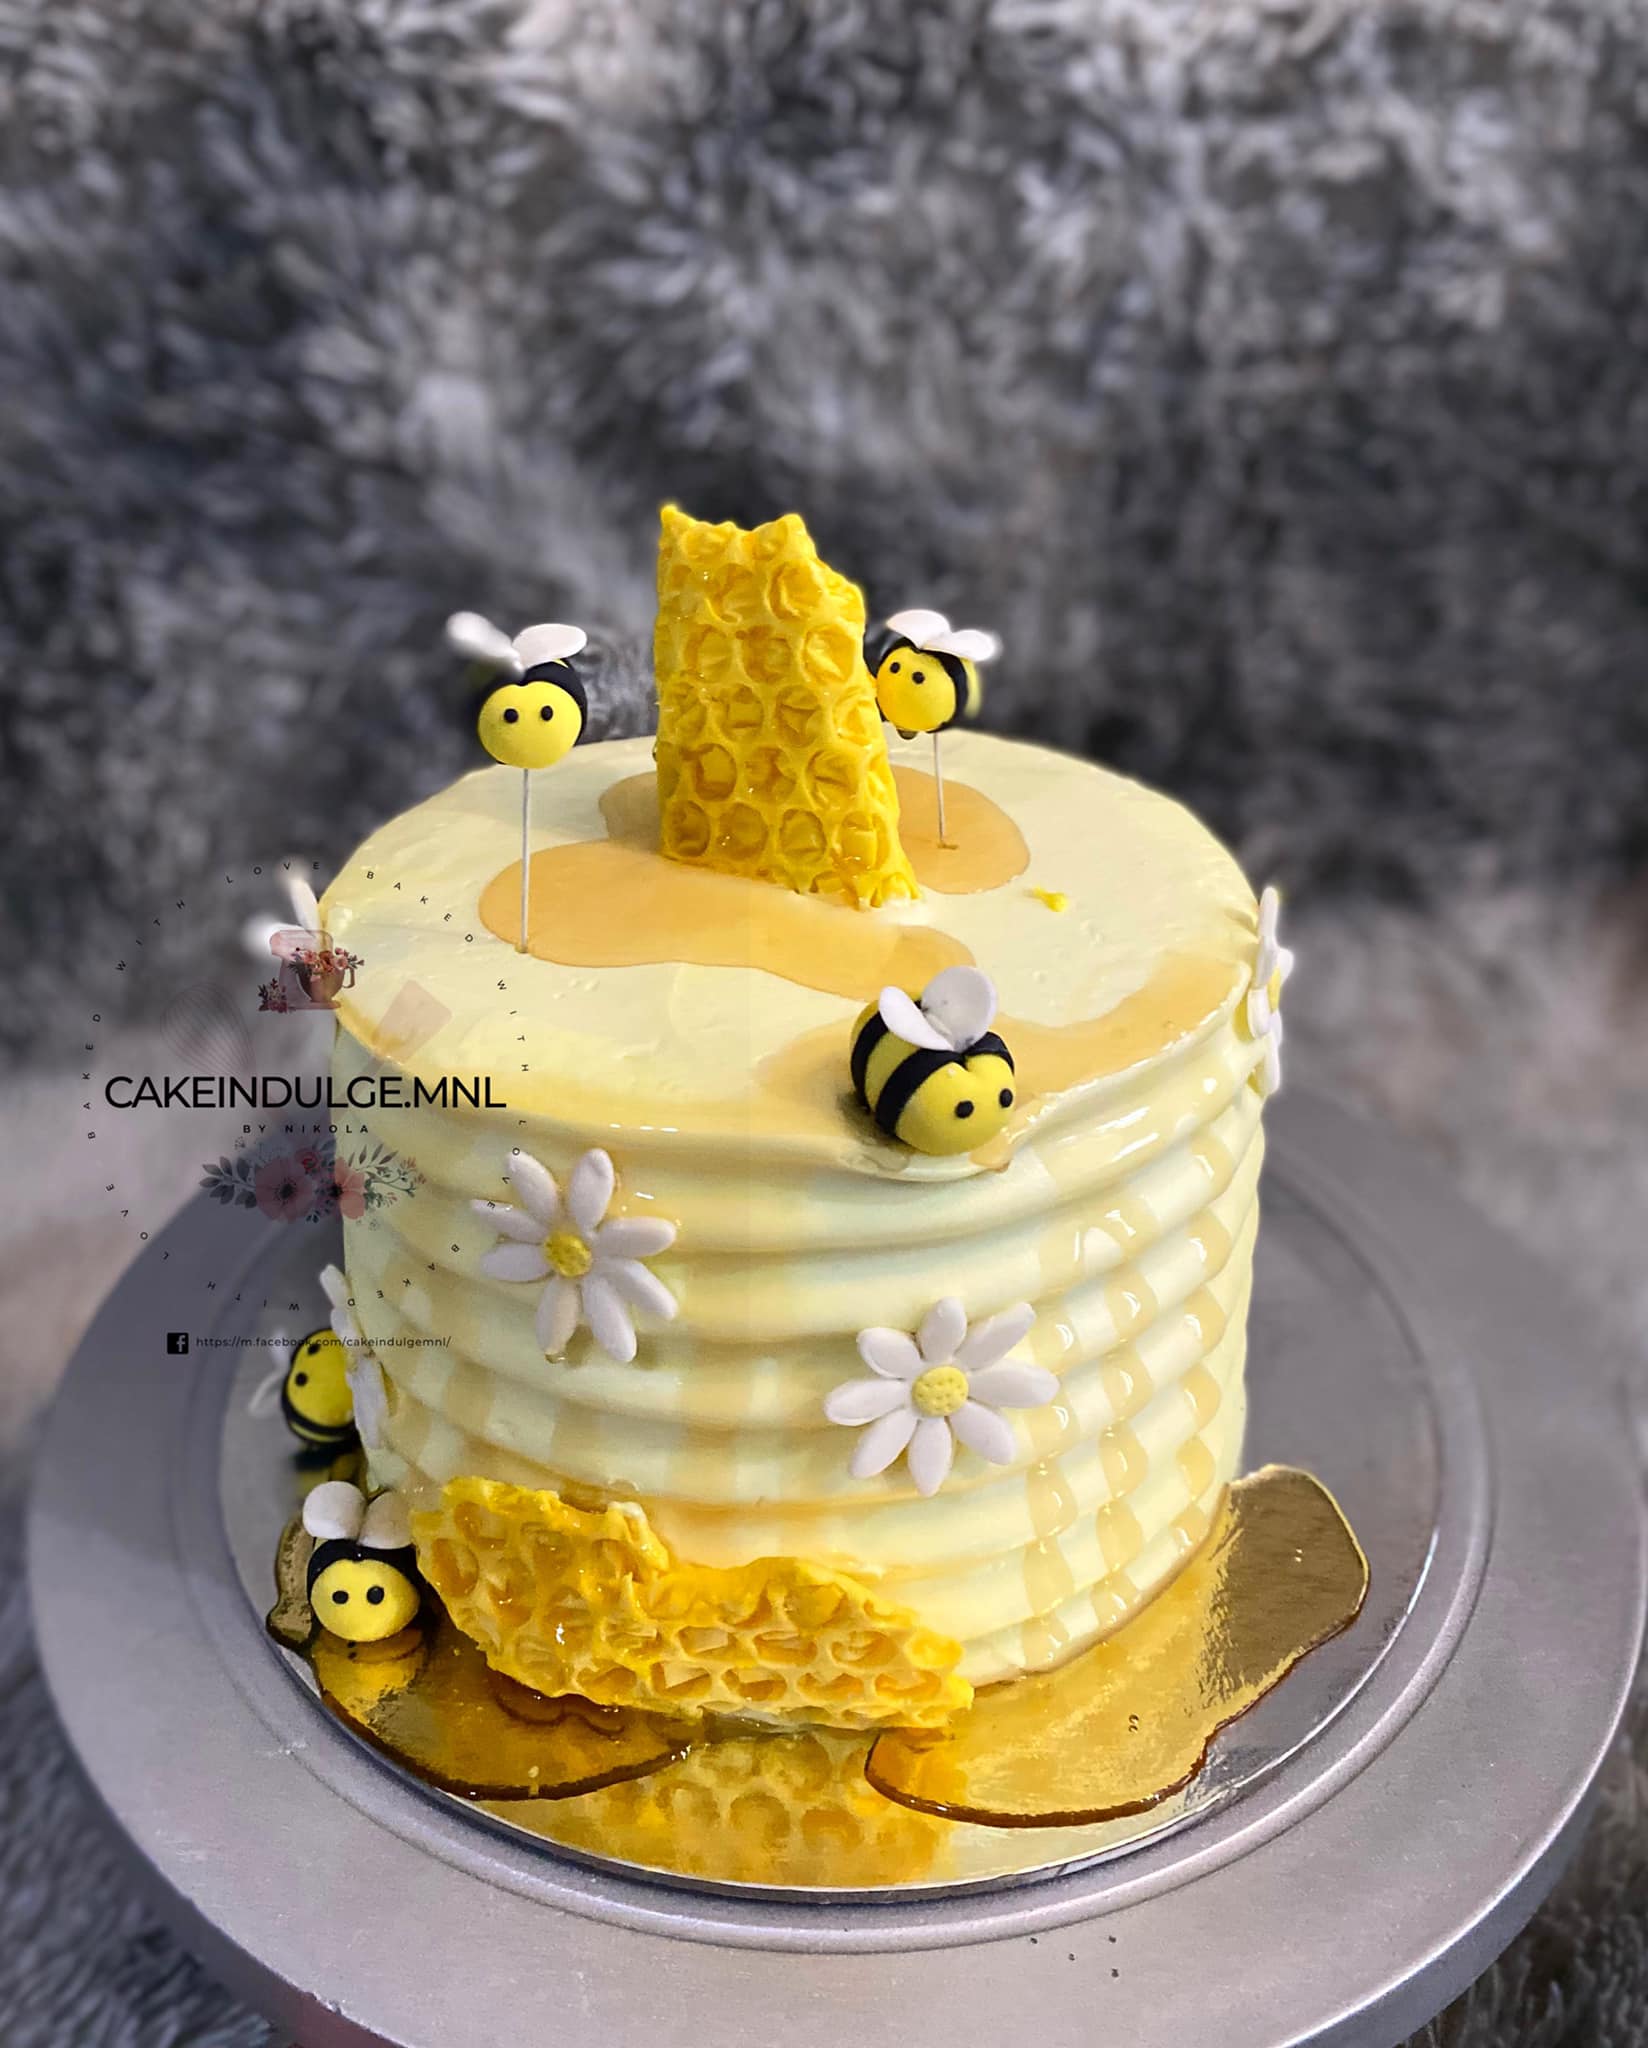 Honey bee cake, an additional sweetness